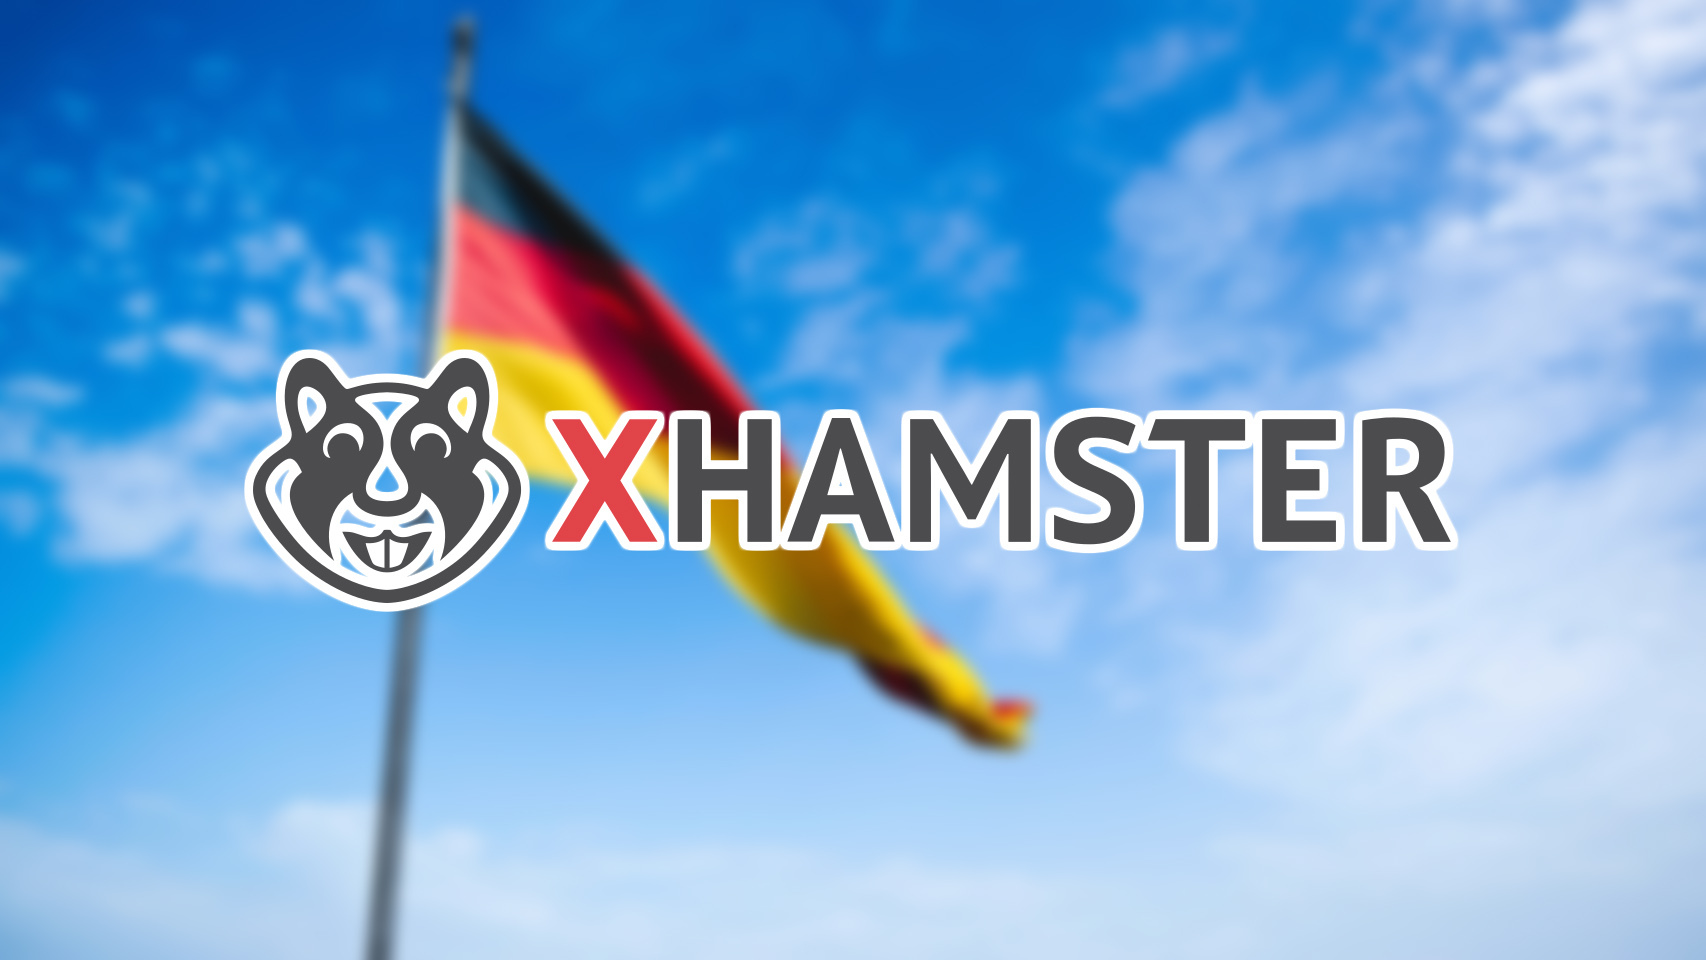 xHamster junto a la bandera alemana.